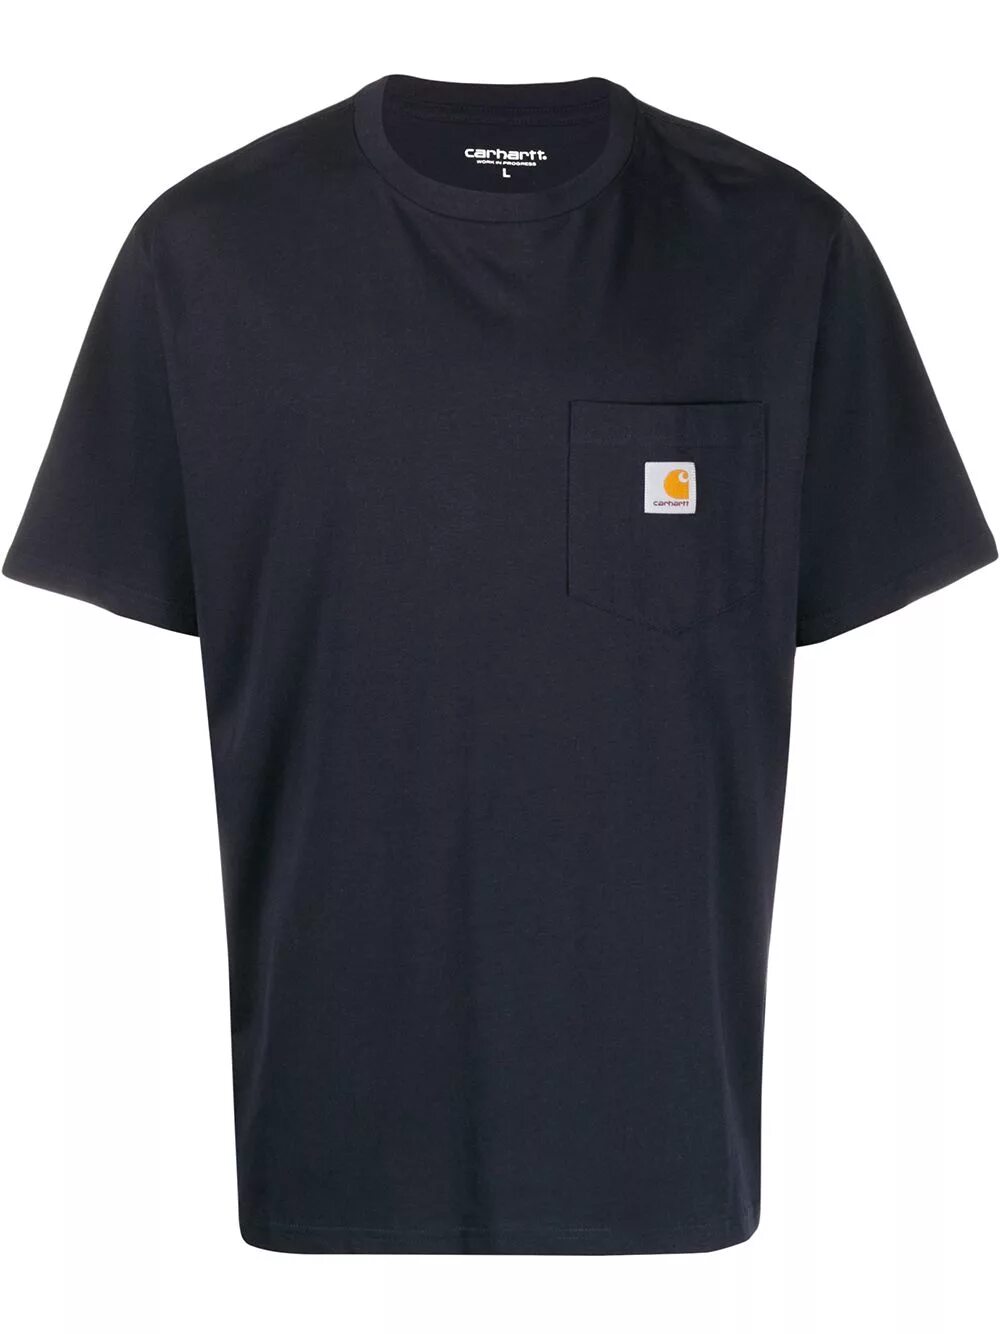 Футболка Кархарт WIP. Carhartt WIP футболка мужская. Carhartt WIP Pocket Blue t Shirt. Футболка Carhartt WIP мужская бирки. Купить футболку с карманом